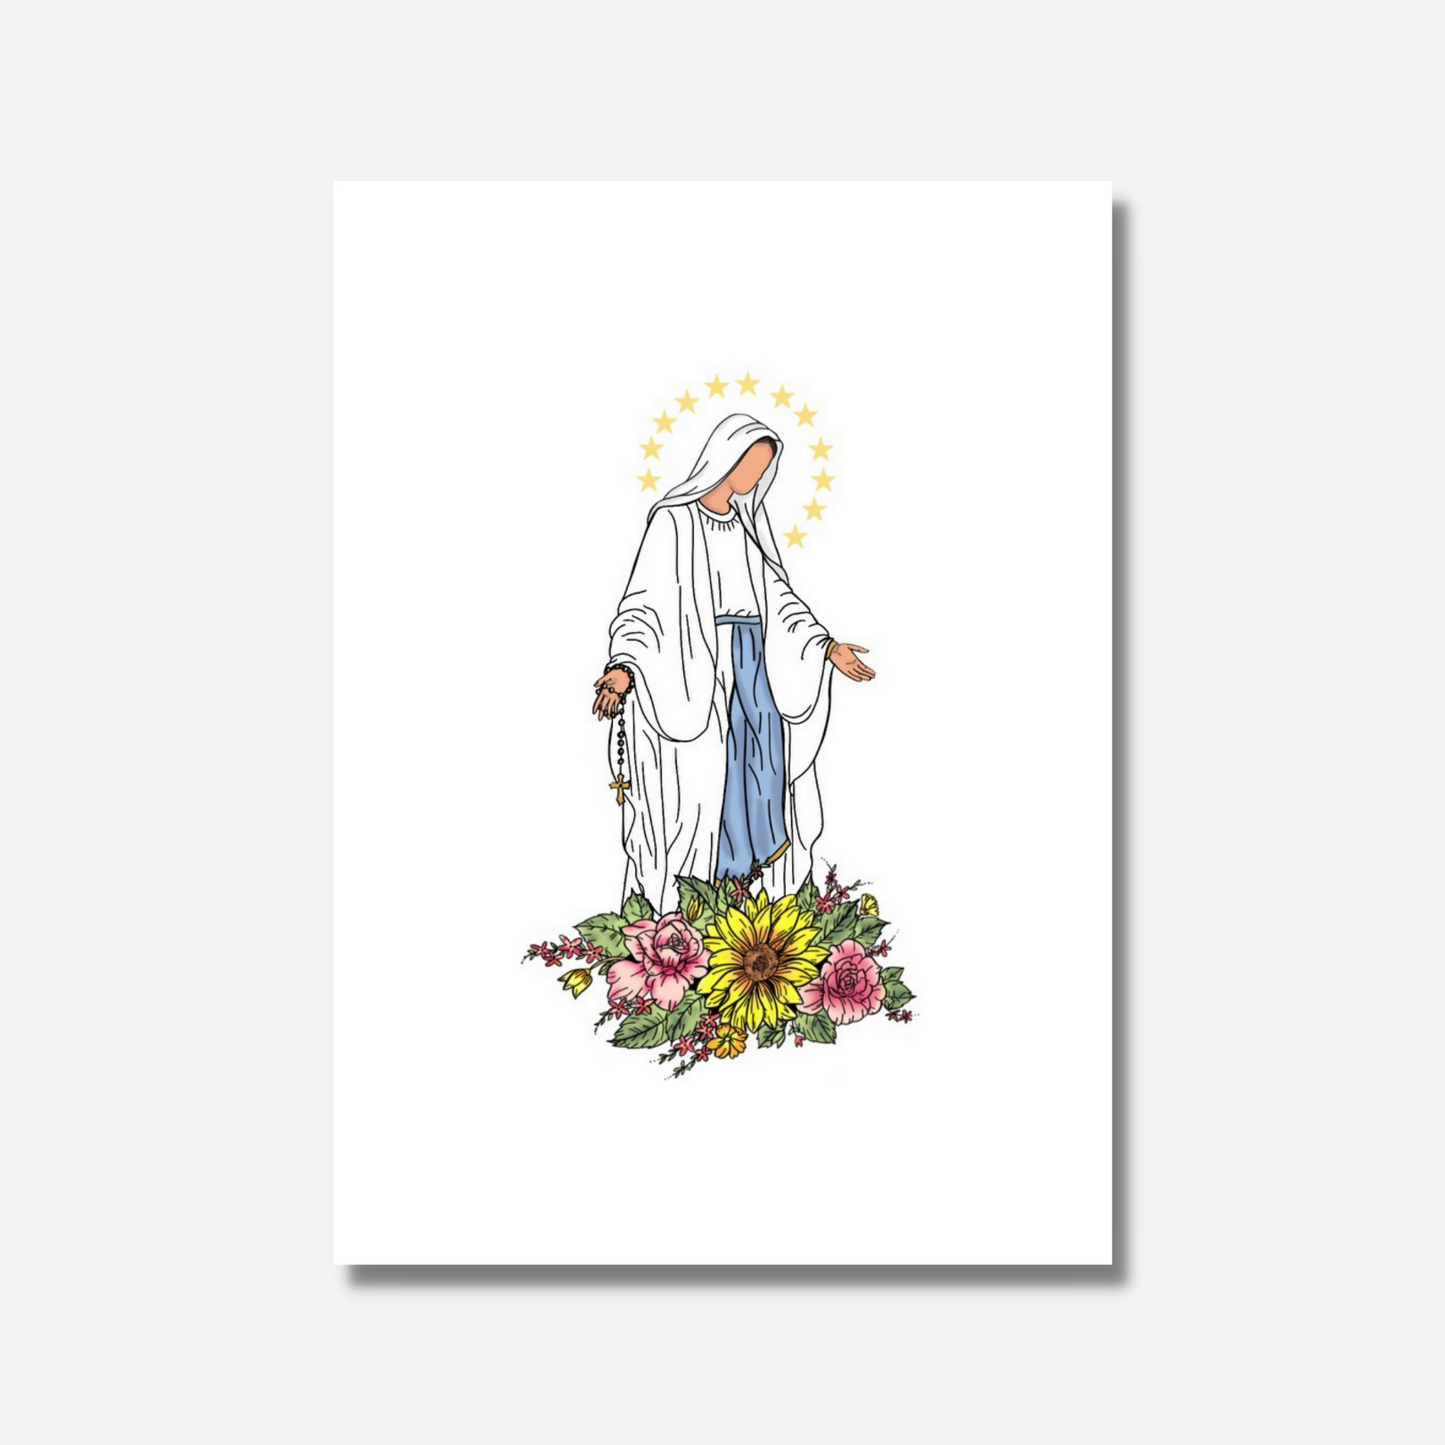 Our Lady of Lourdes - 5"x7" Print